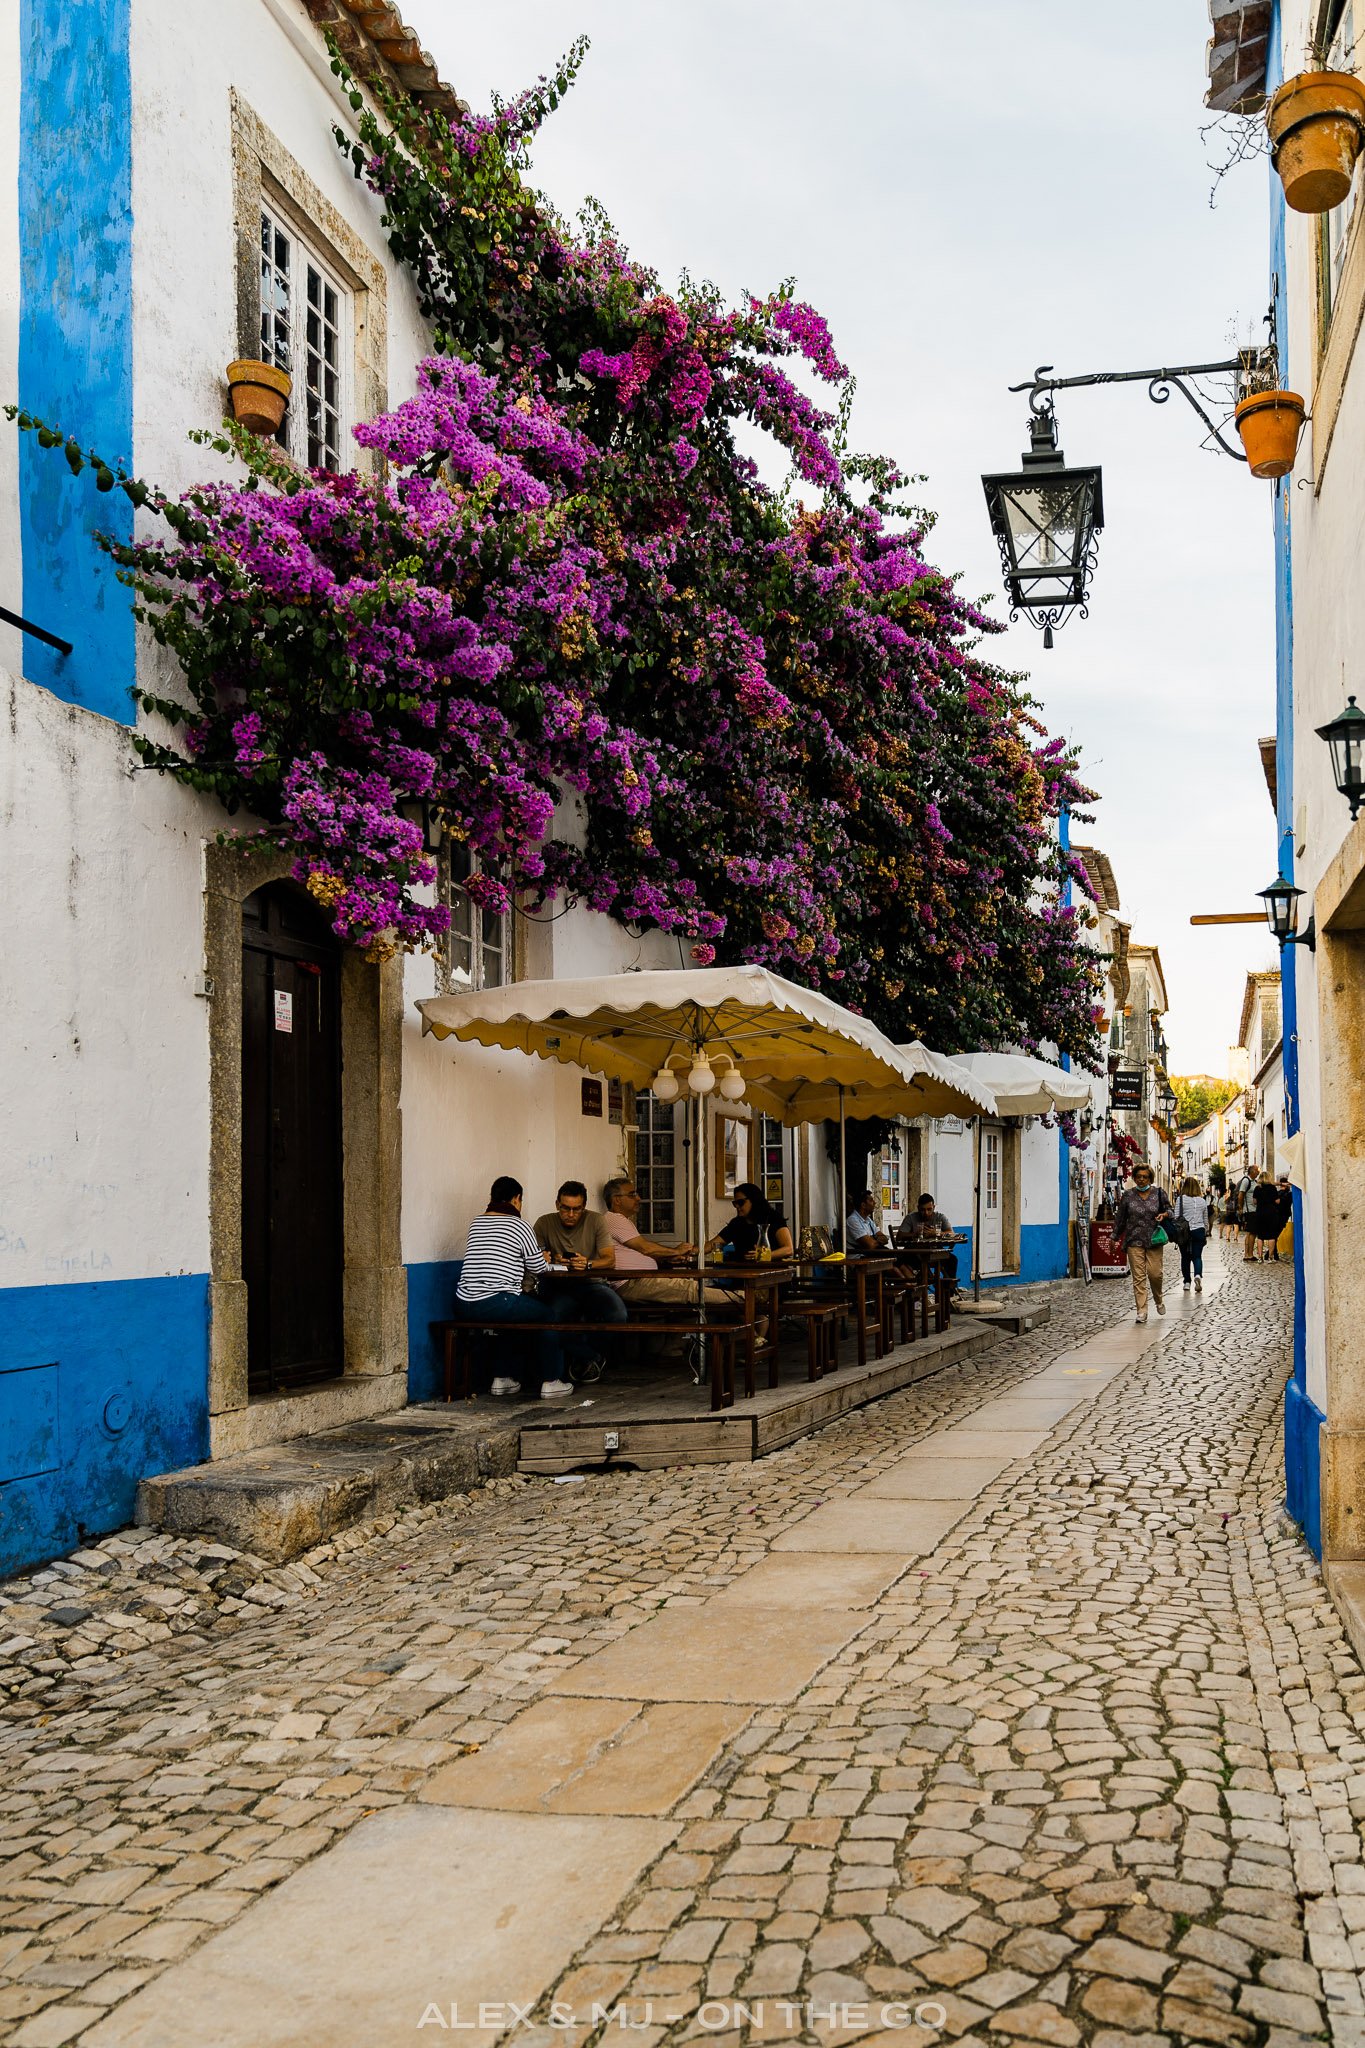 Alex-MJ-On-the-GO-Portugal_itinéraire_Obidos_dans les rues_fleurs mauves.jpg